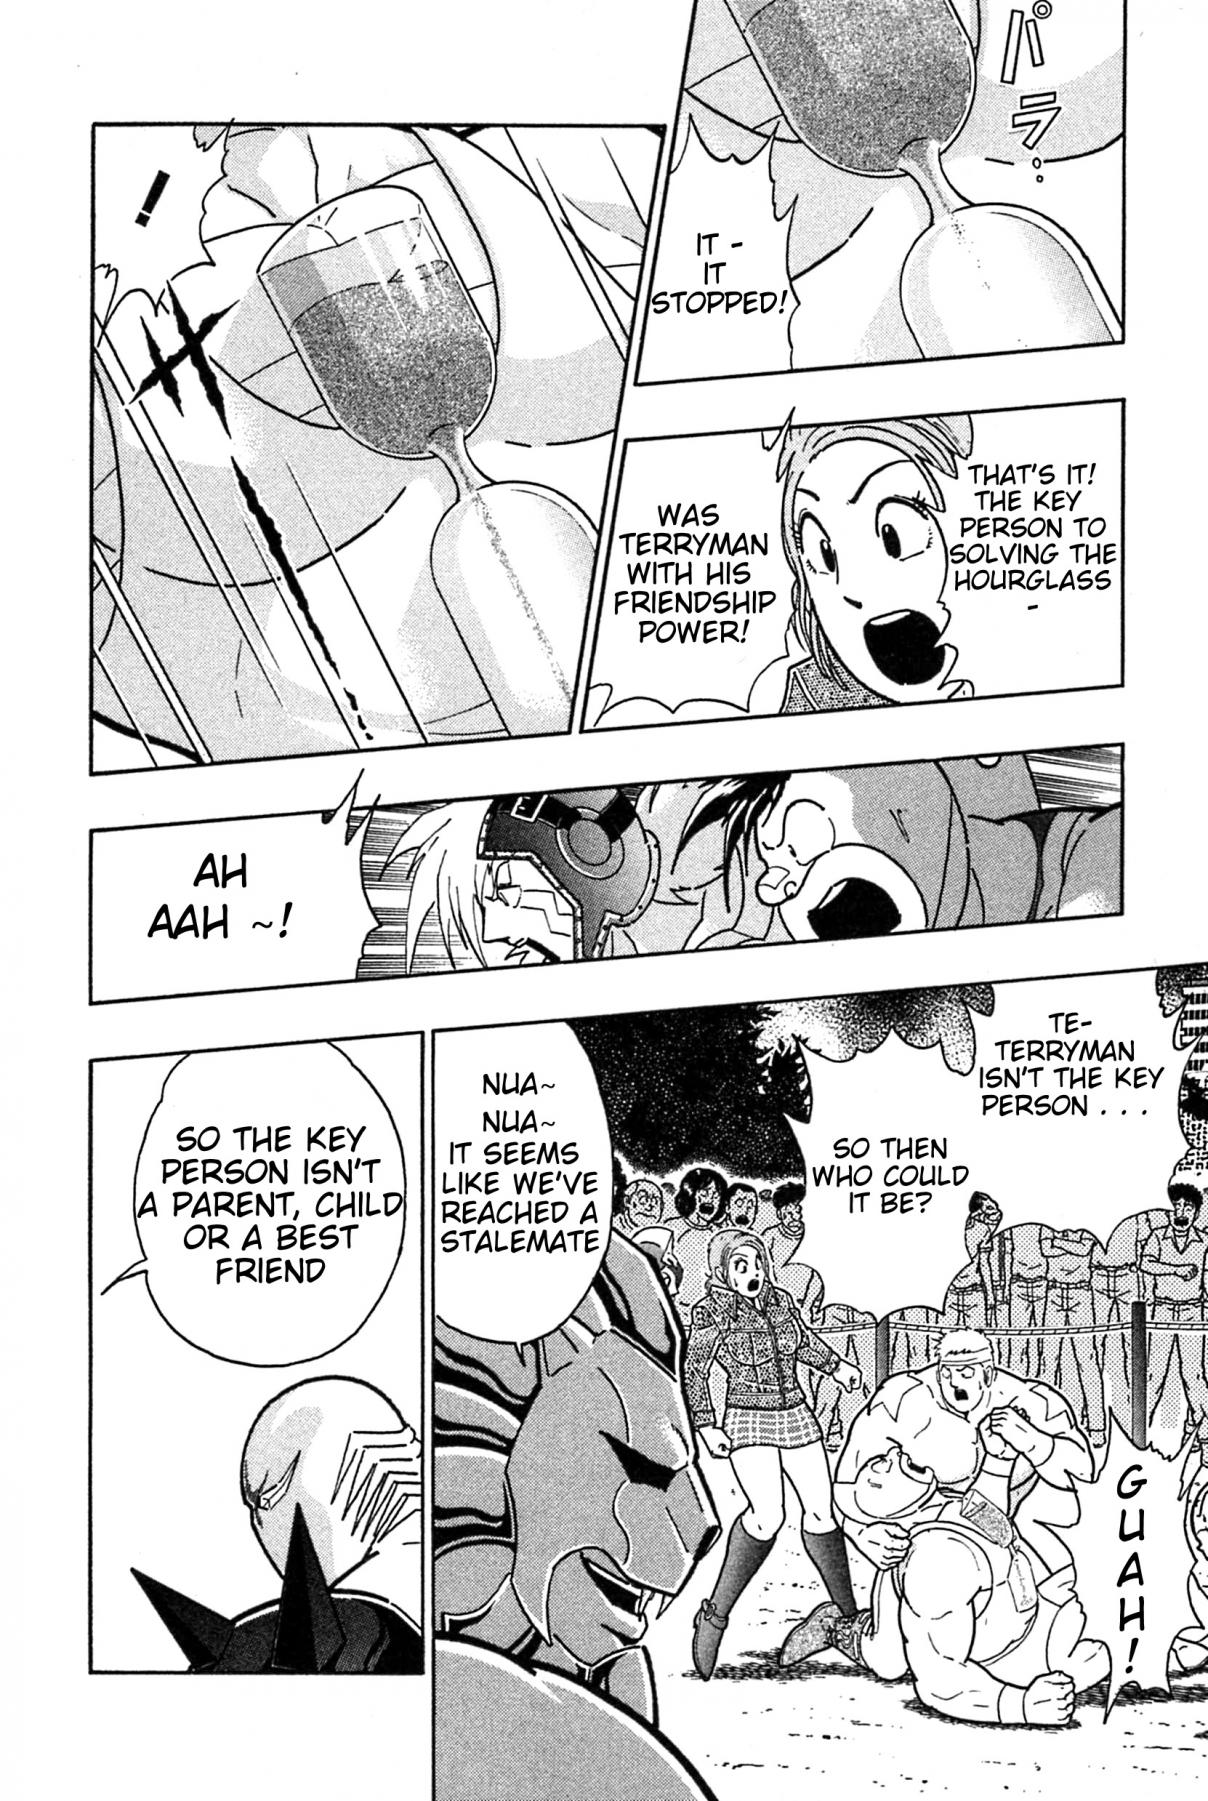 Kinnikuman Nisei: Ultimate Choujin Tag Vol. 17 Ch. 186 Where is the Key Person?